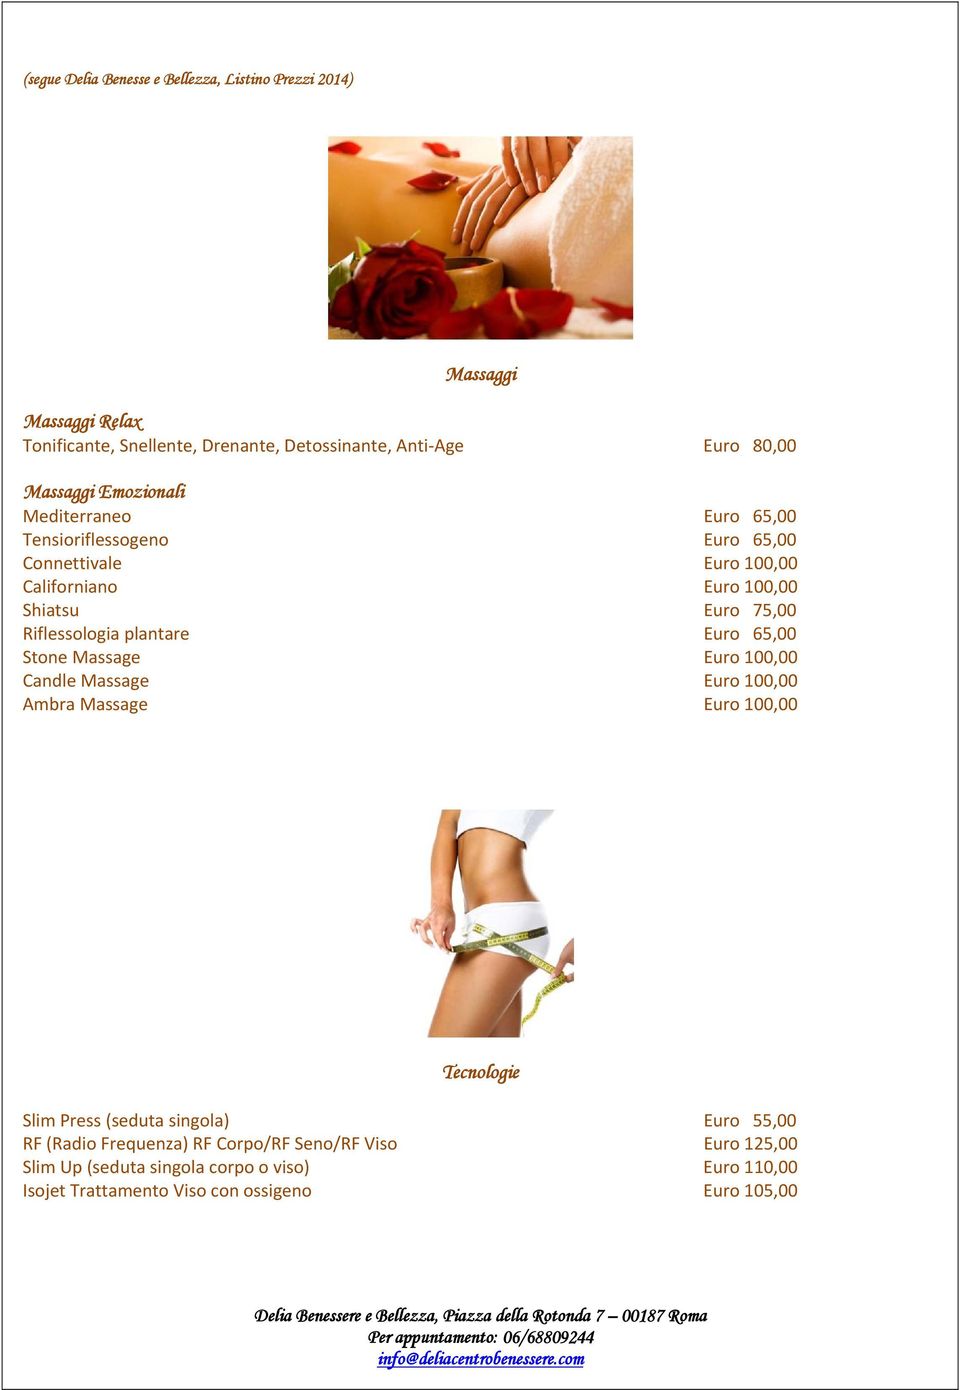 Massage Euro 100,00 Ambra Massage Euro 100,00 Tecnologie Slim Press (seduta singola) Euro 55,00 RF (Radio Frequenza) RF Corpo/RF Seno/RF Viso Euro 125,00 Slim Up (seduta singola